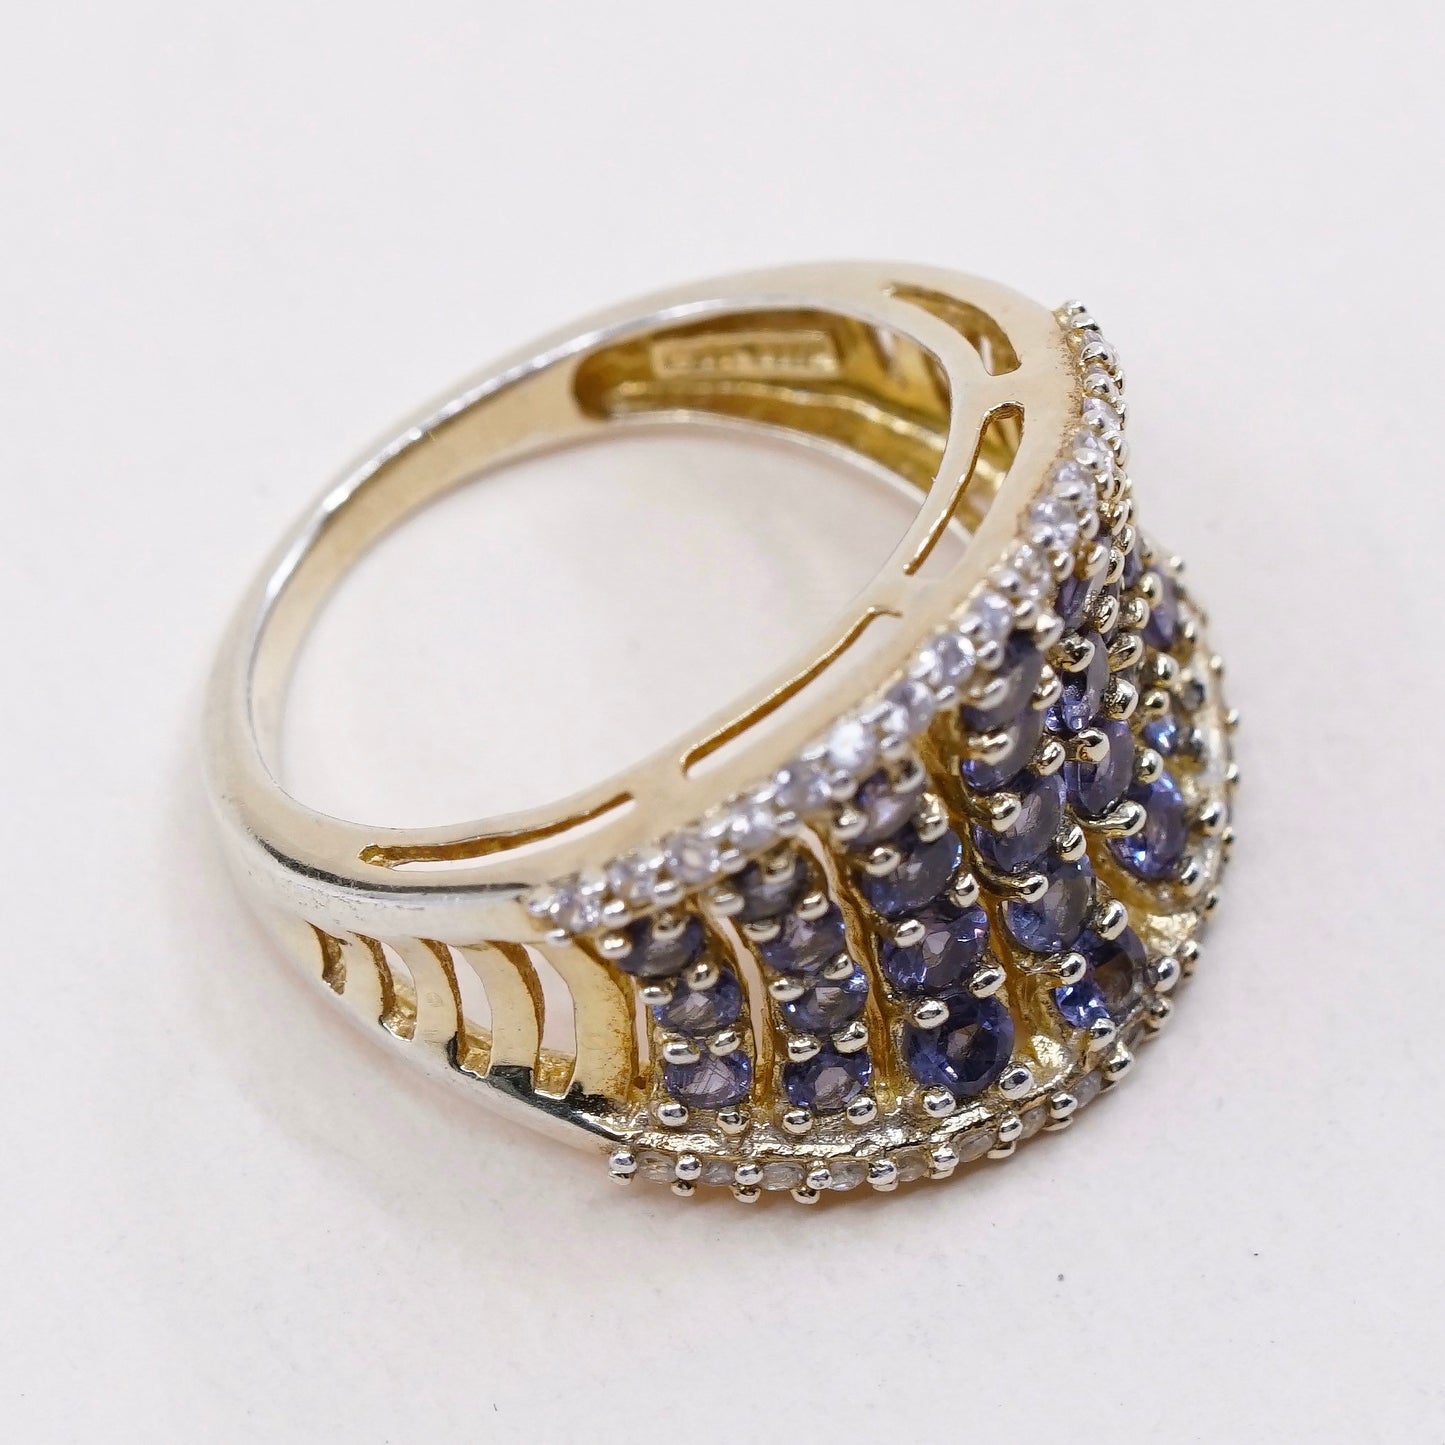 sz 7, Vermeil gold sterling silver ring, 925 band w/ cluster amethyst N diamond